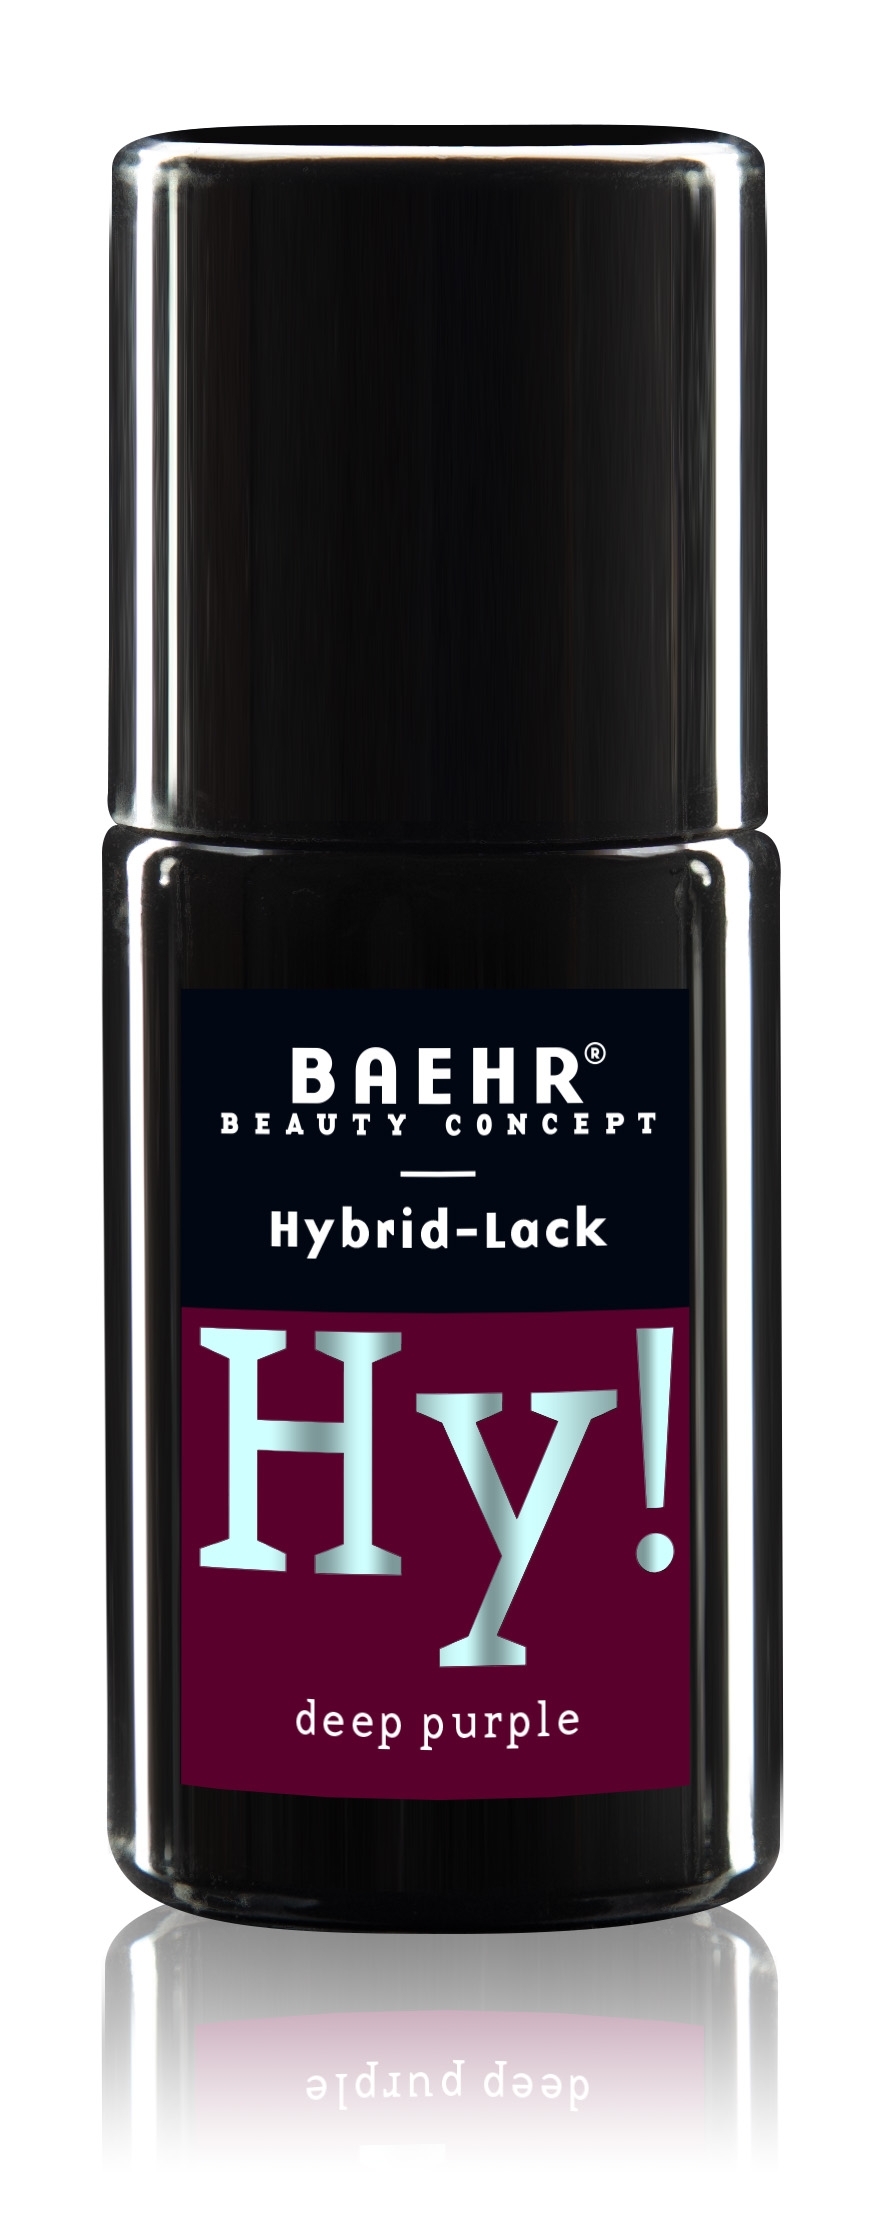 BAEHR BEAUTY CONCEPT - NAILS Hy! Hybrid-Lack, deep purple 8 ml